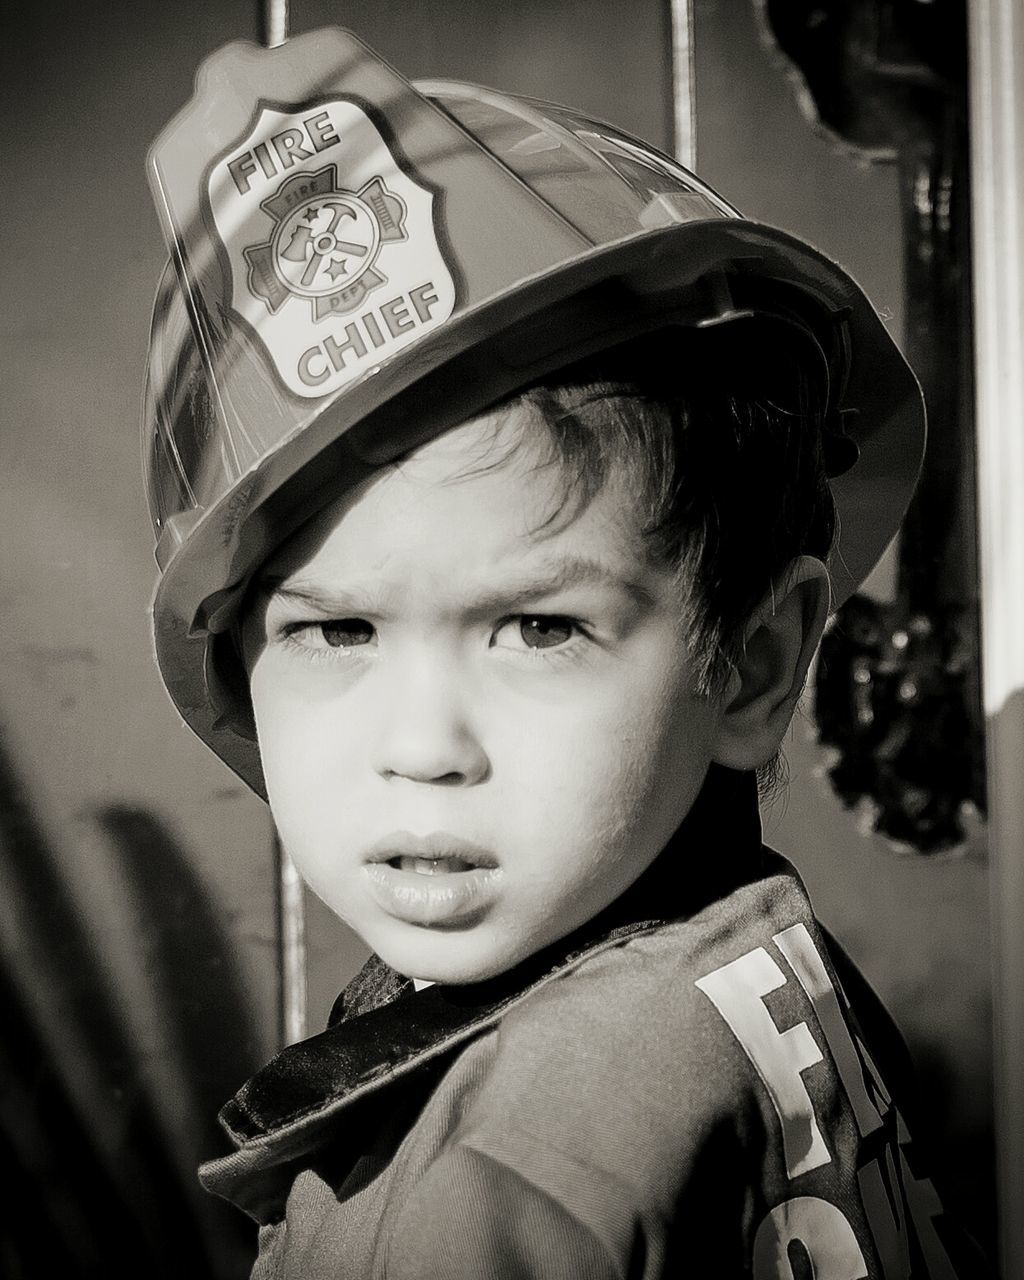 Portrait of boy in firefighter costume